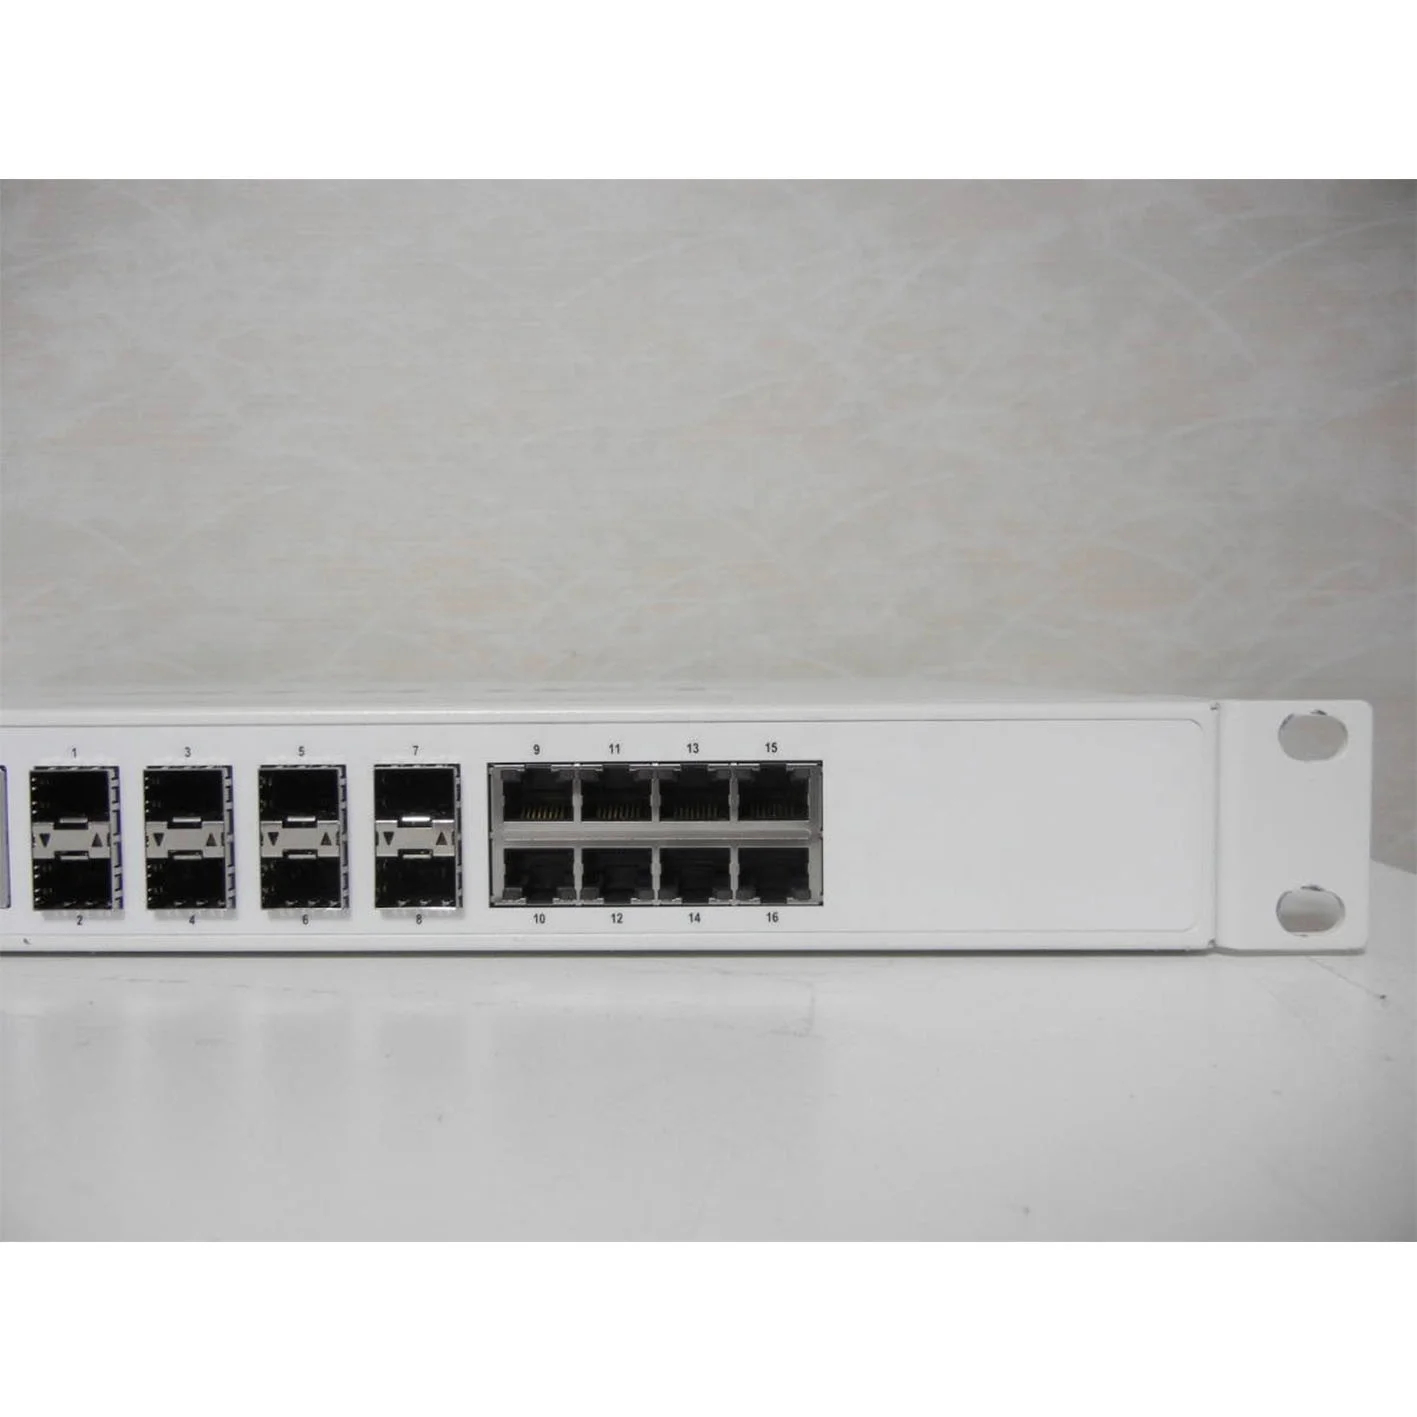 FG-401E New Original Fortinet Fortigate 401E series Network Security Firewall Appliance